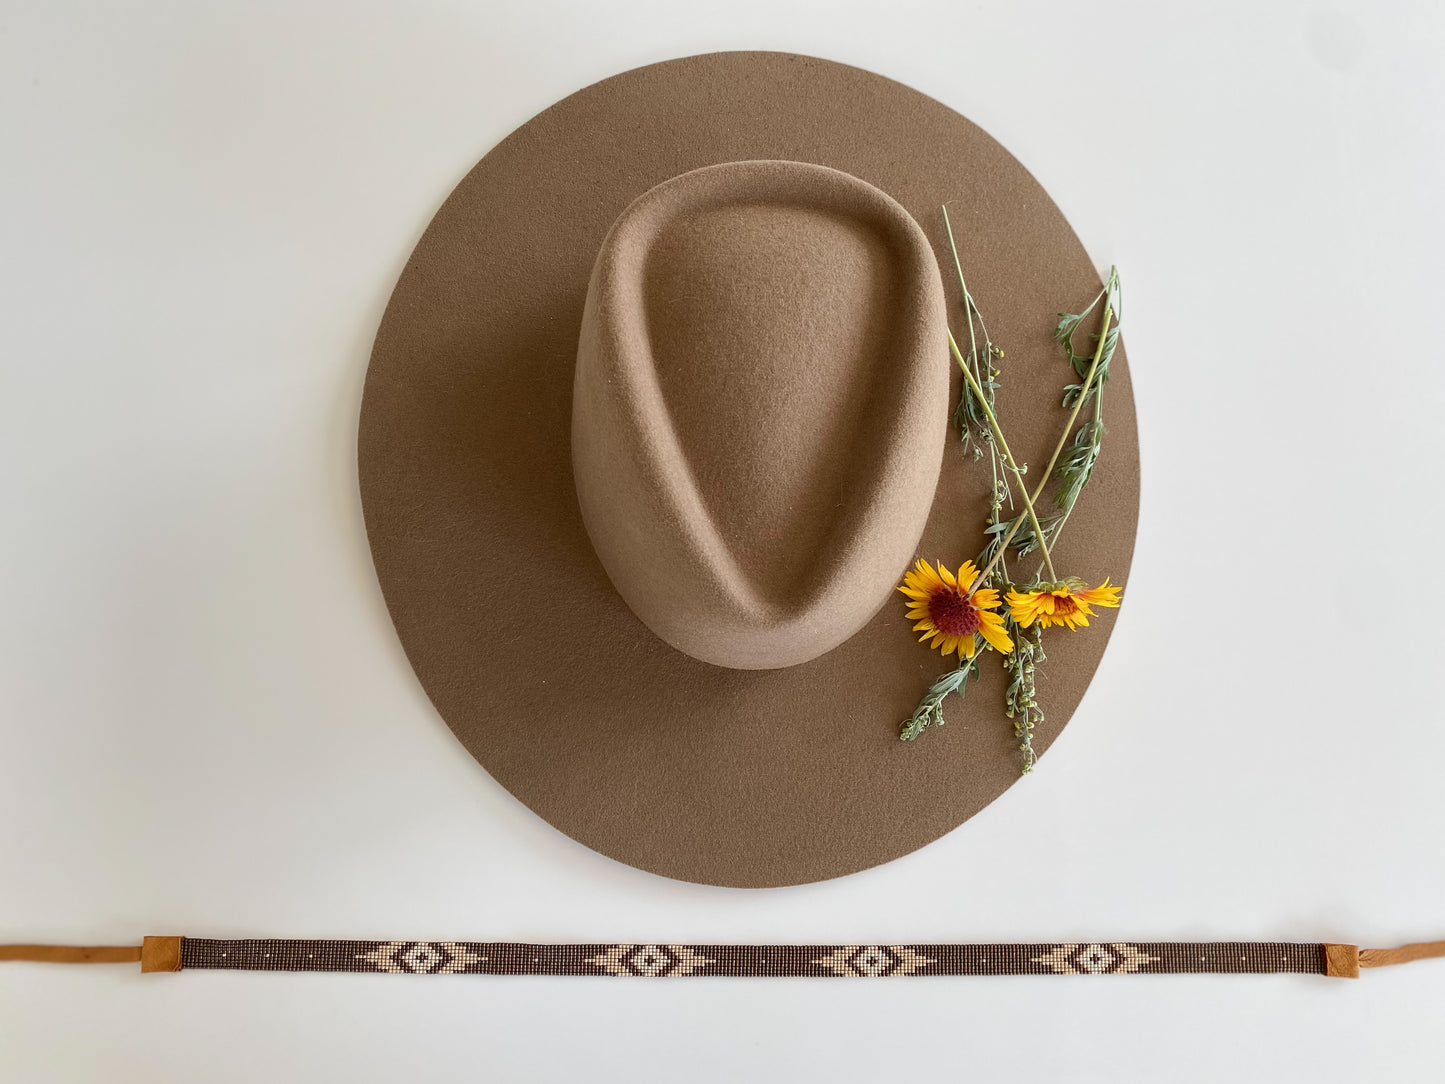 Western Hatband: Brown and Tan